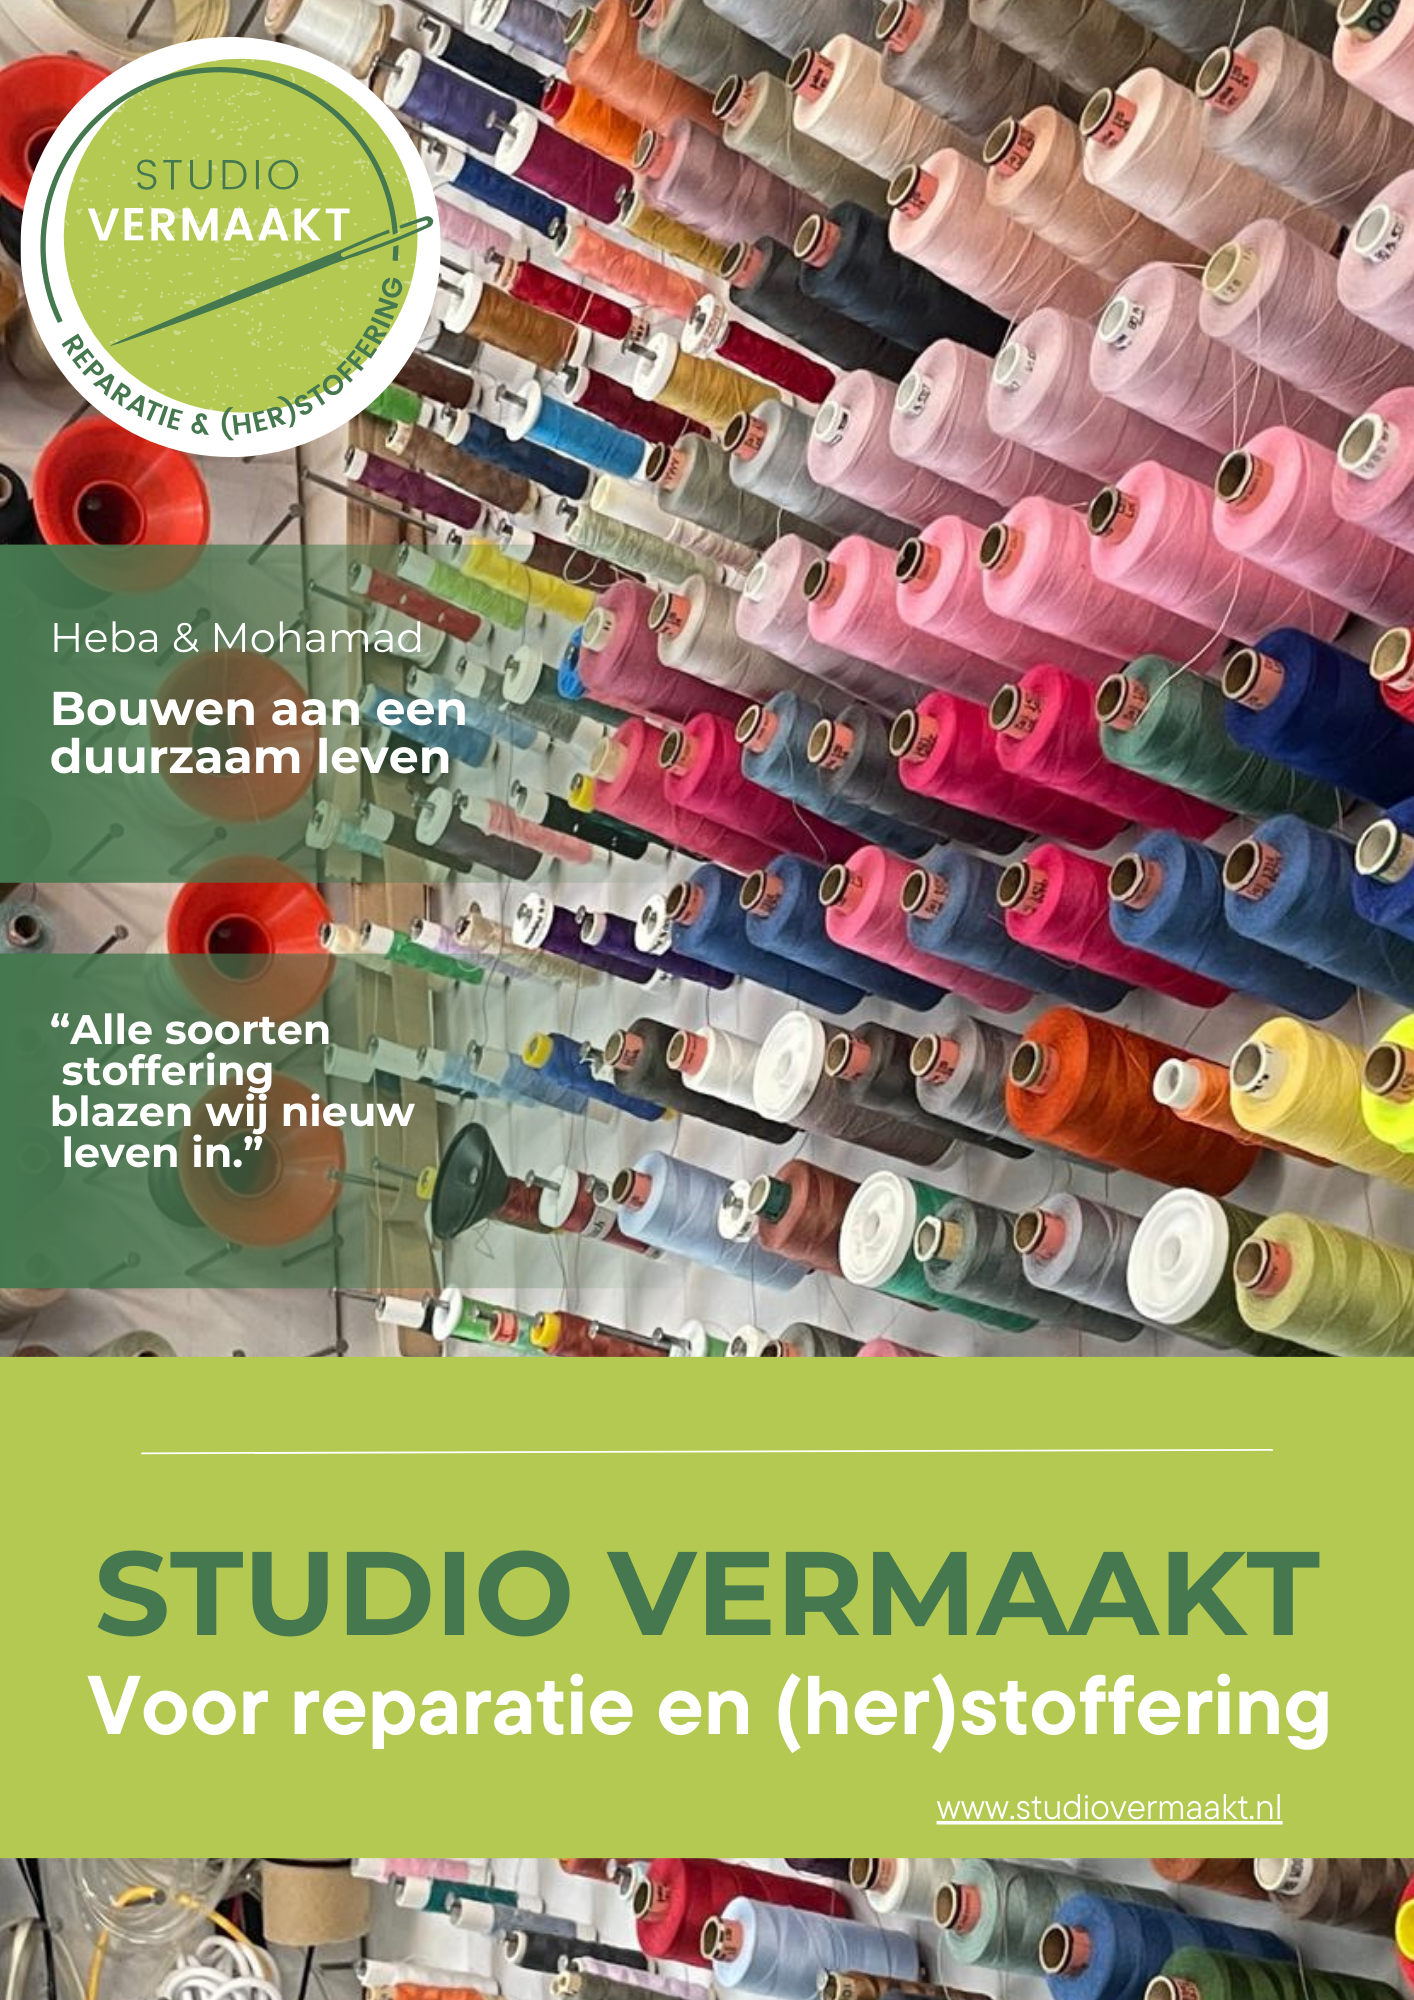 Studio Vermaakt magazine